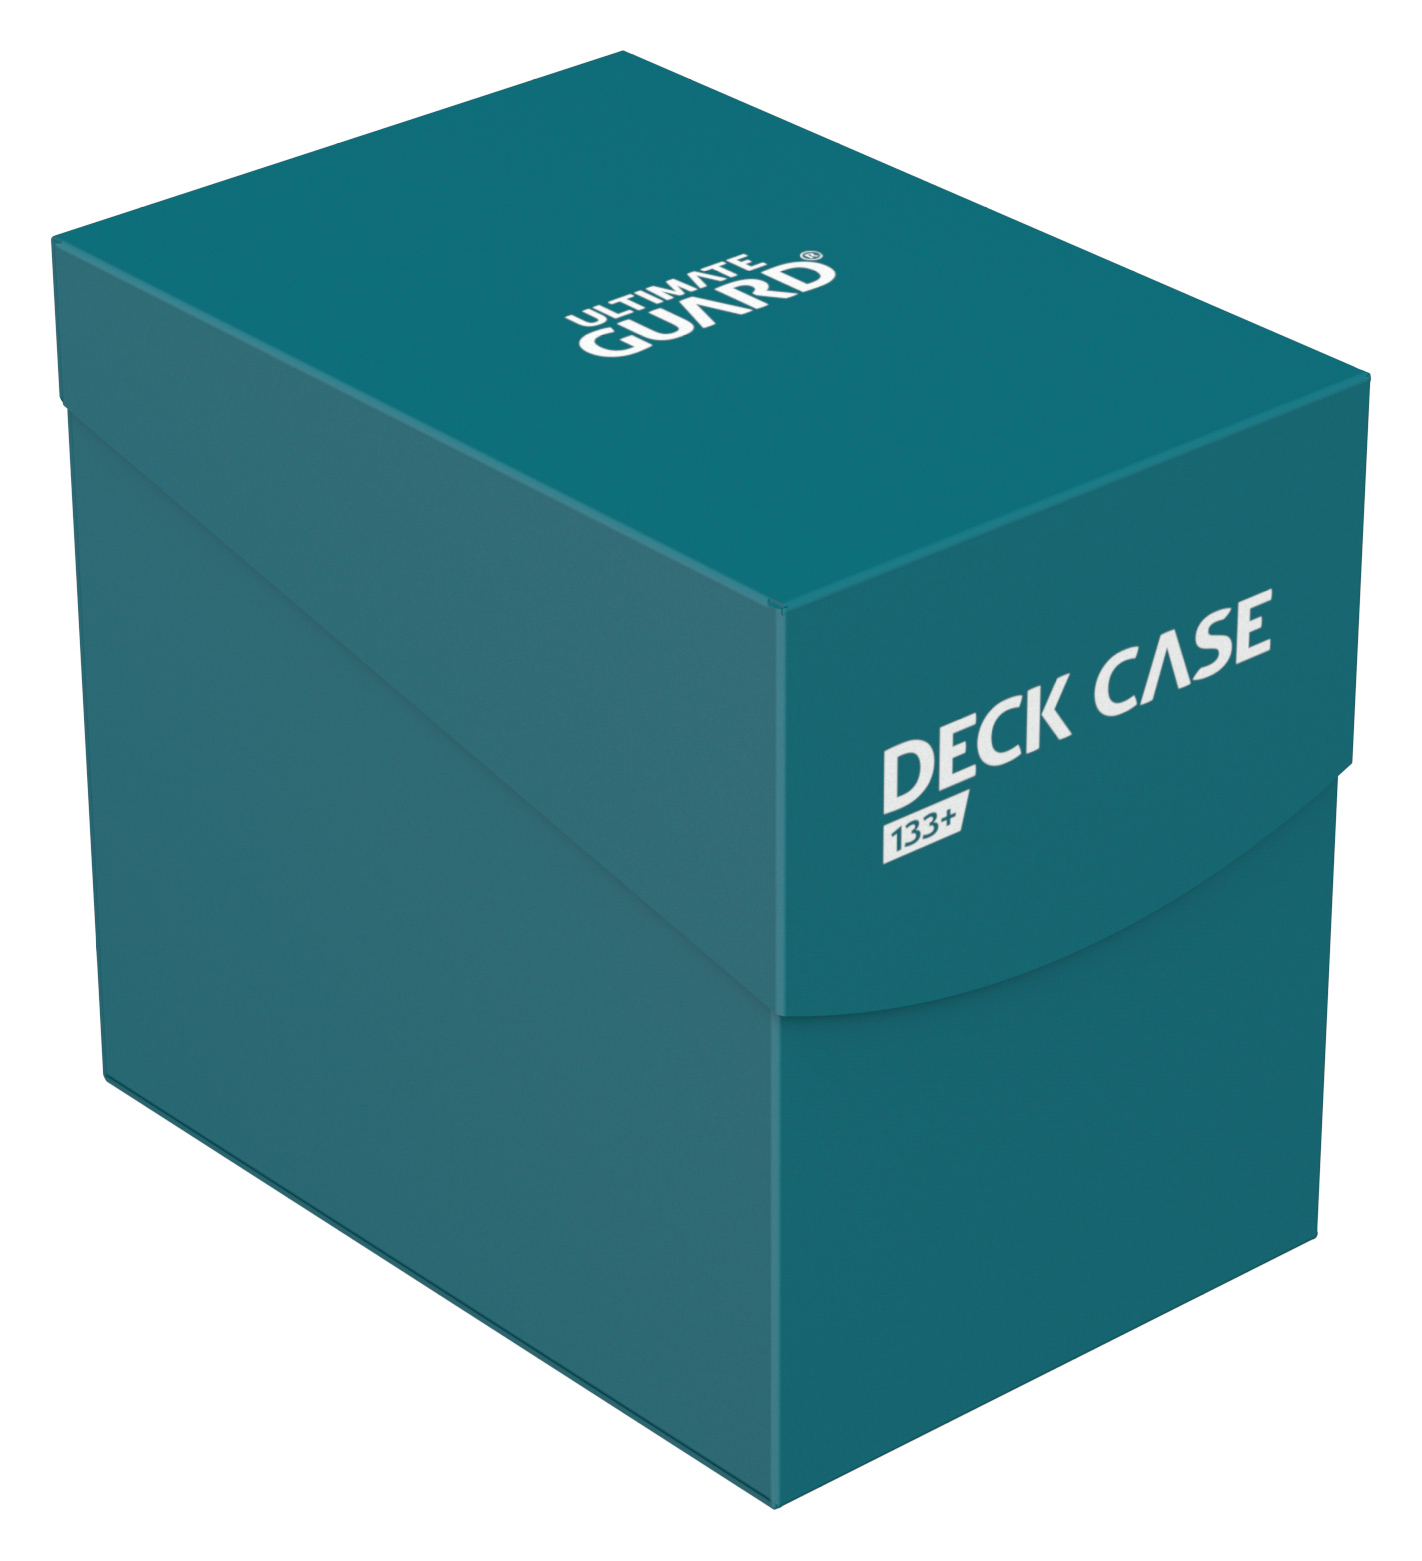 Ultimate Guard Card Deck Box Deck Case 133+ Petrol